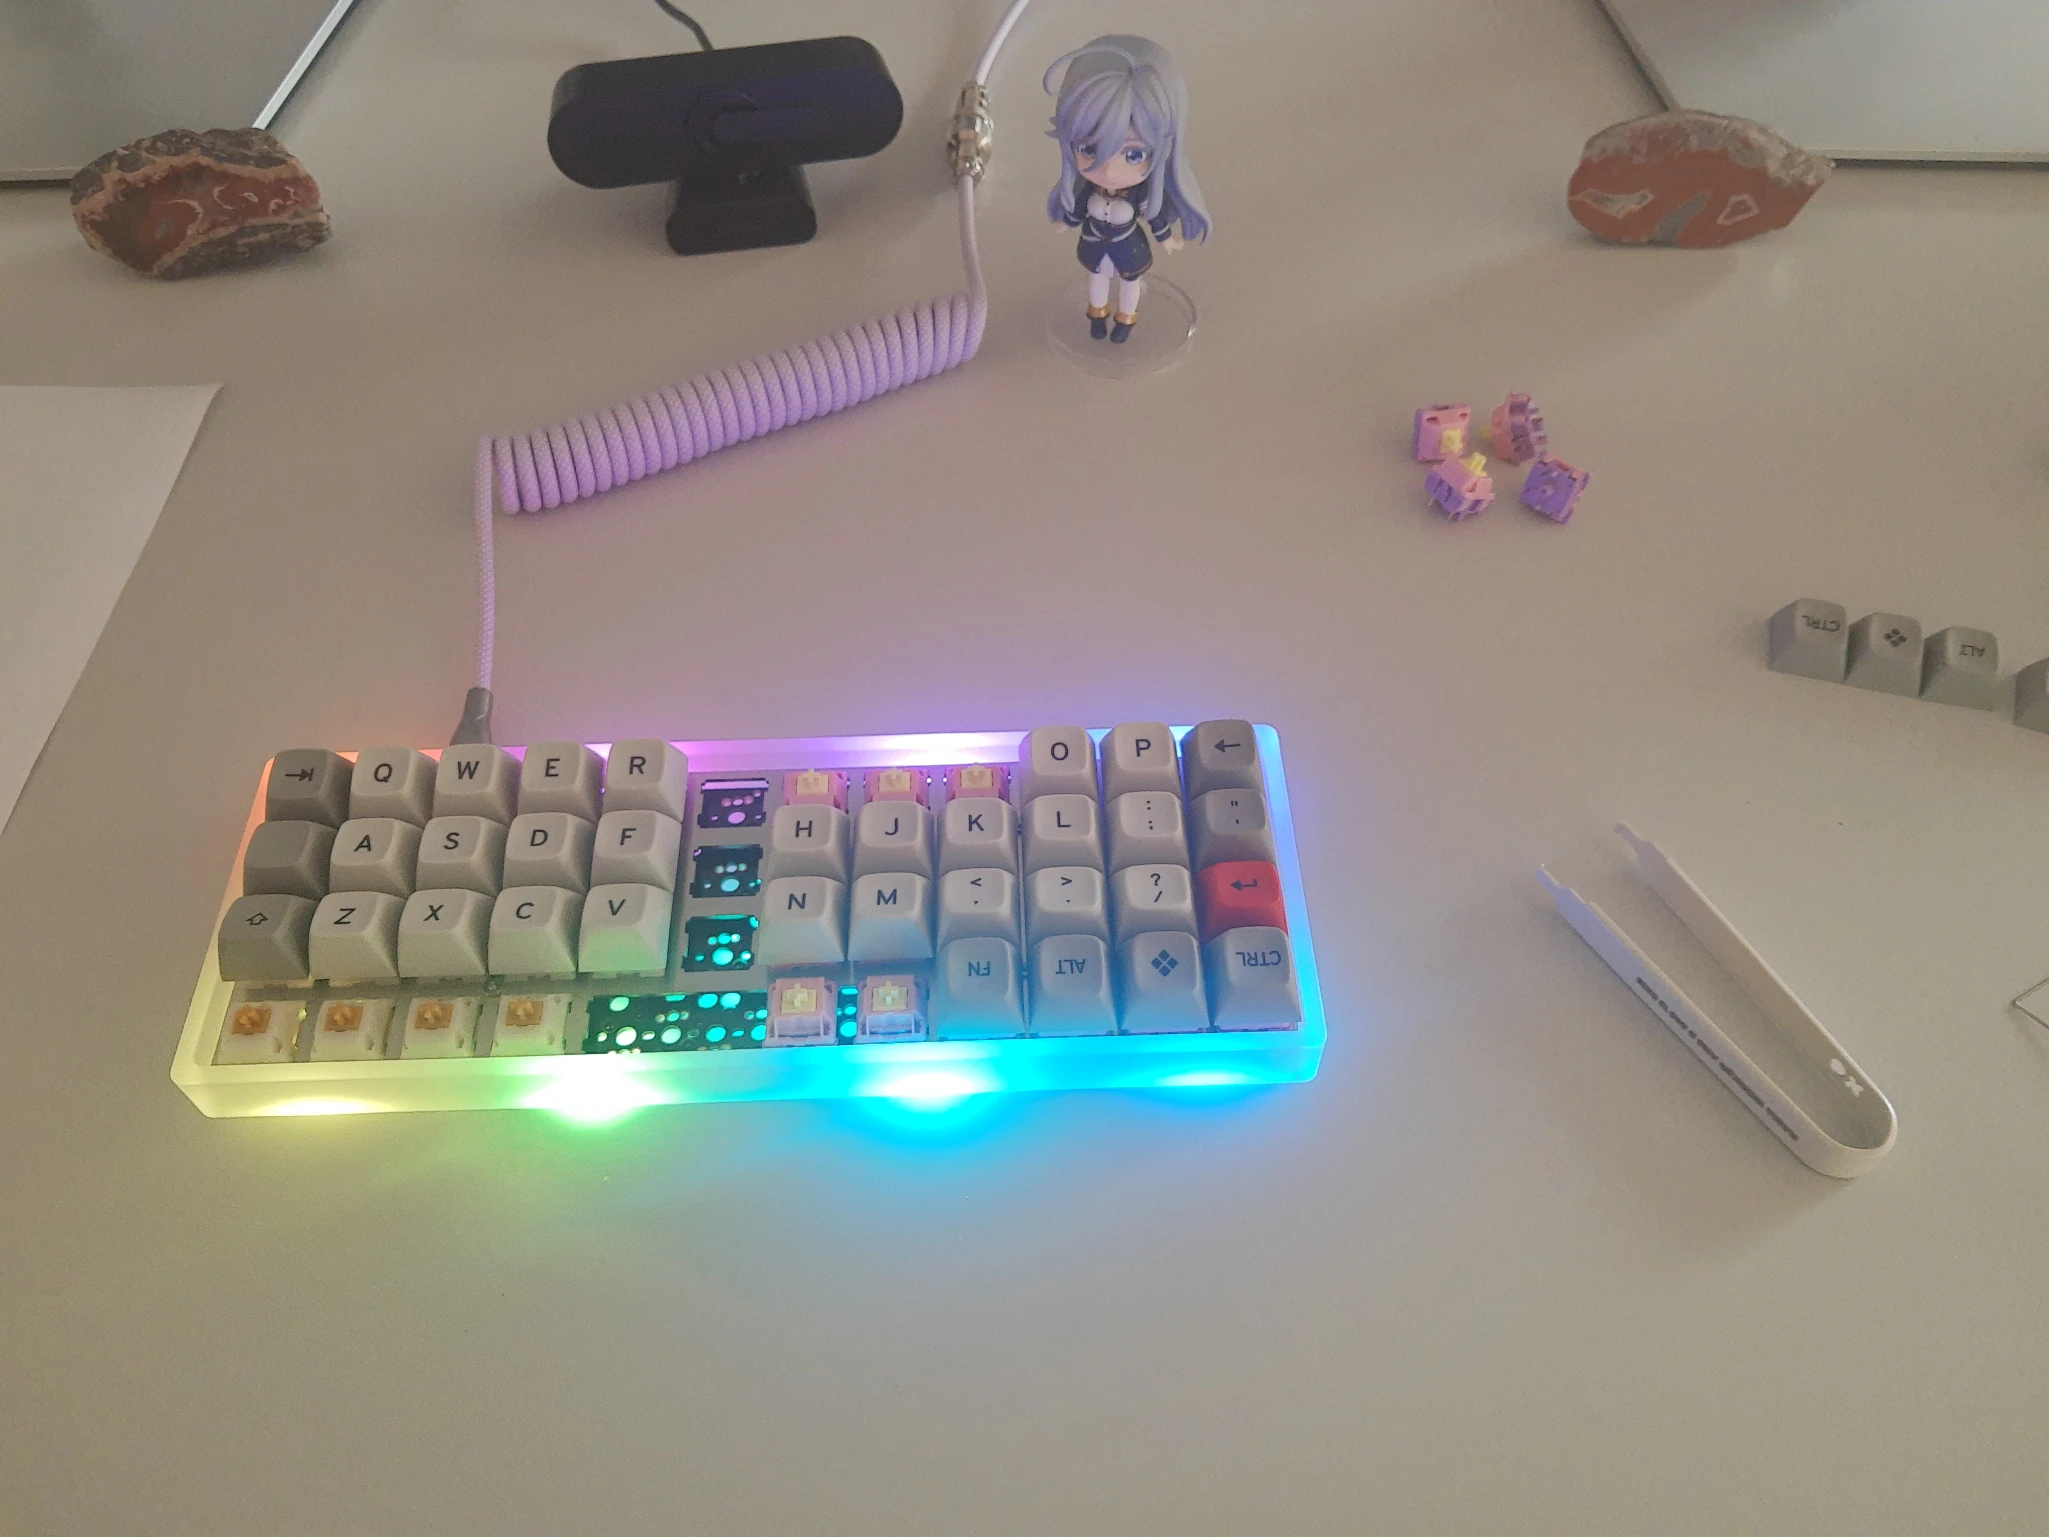 Building the Planck keyboard